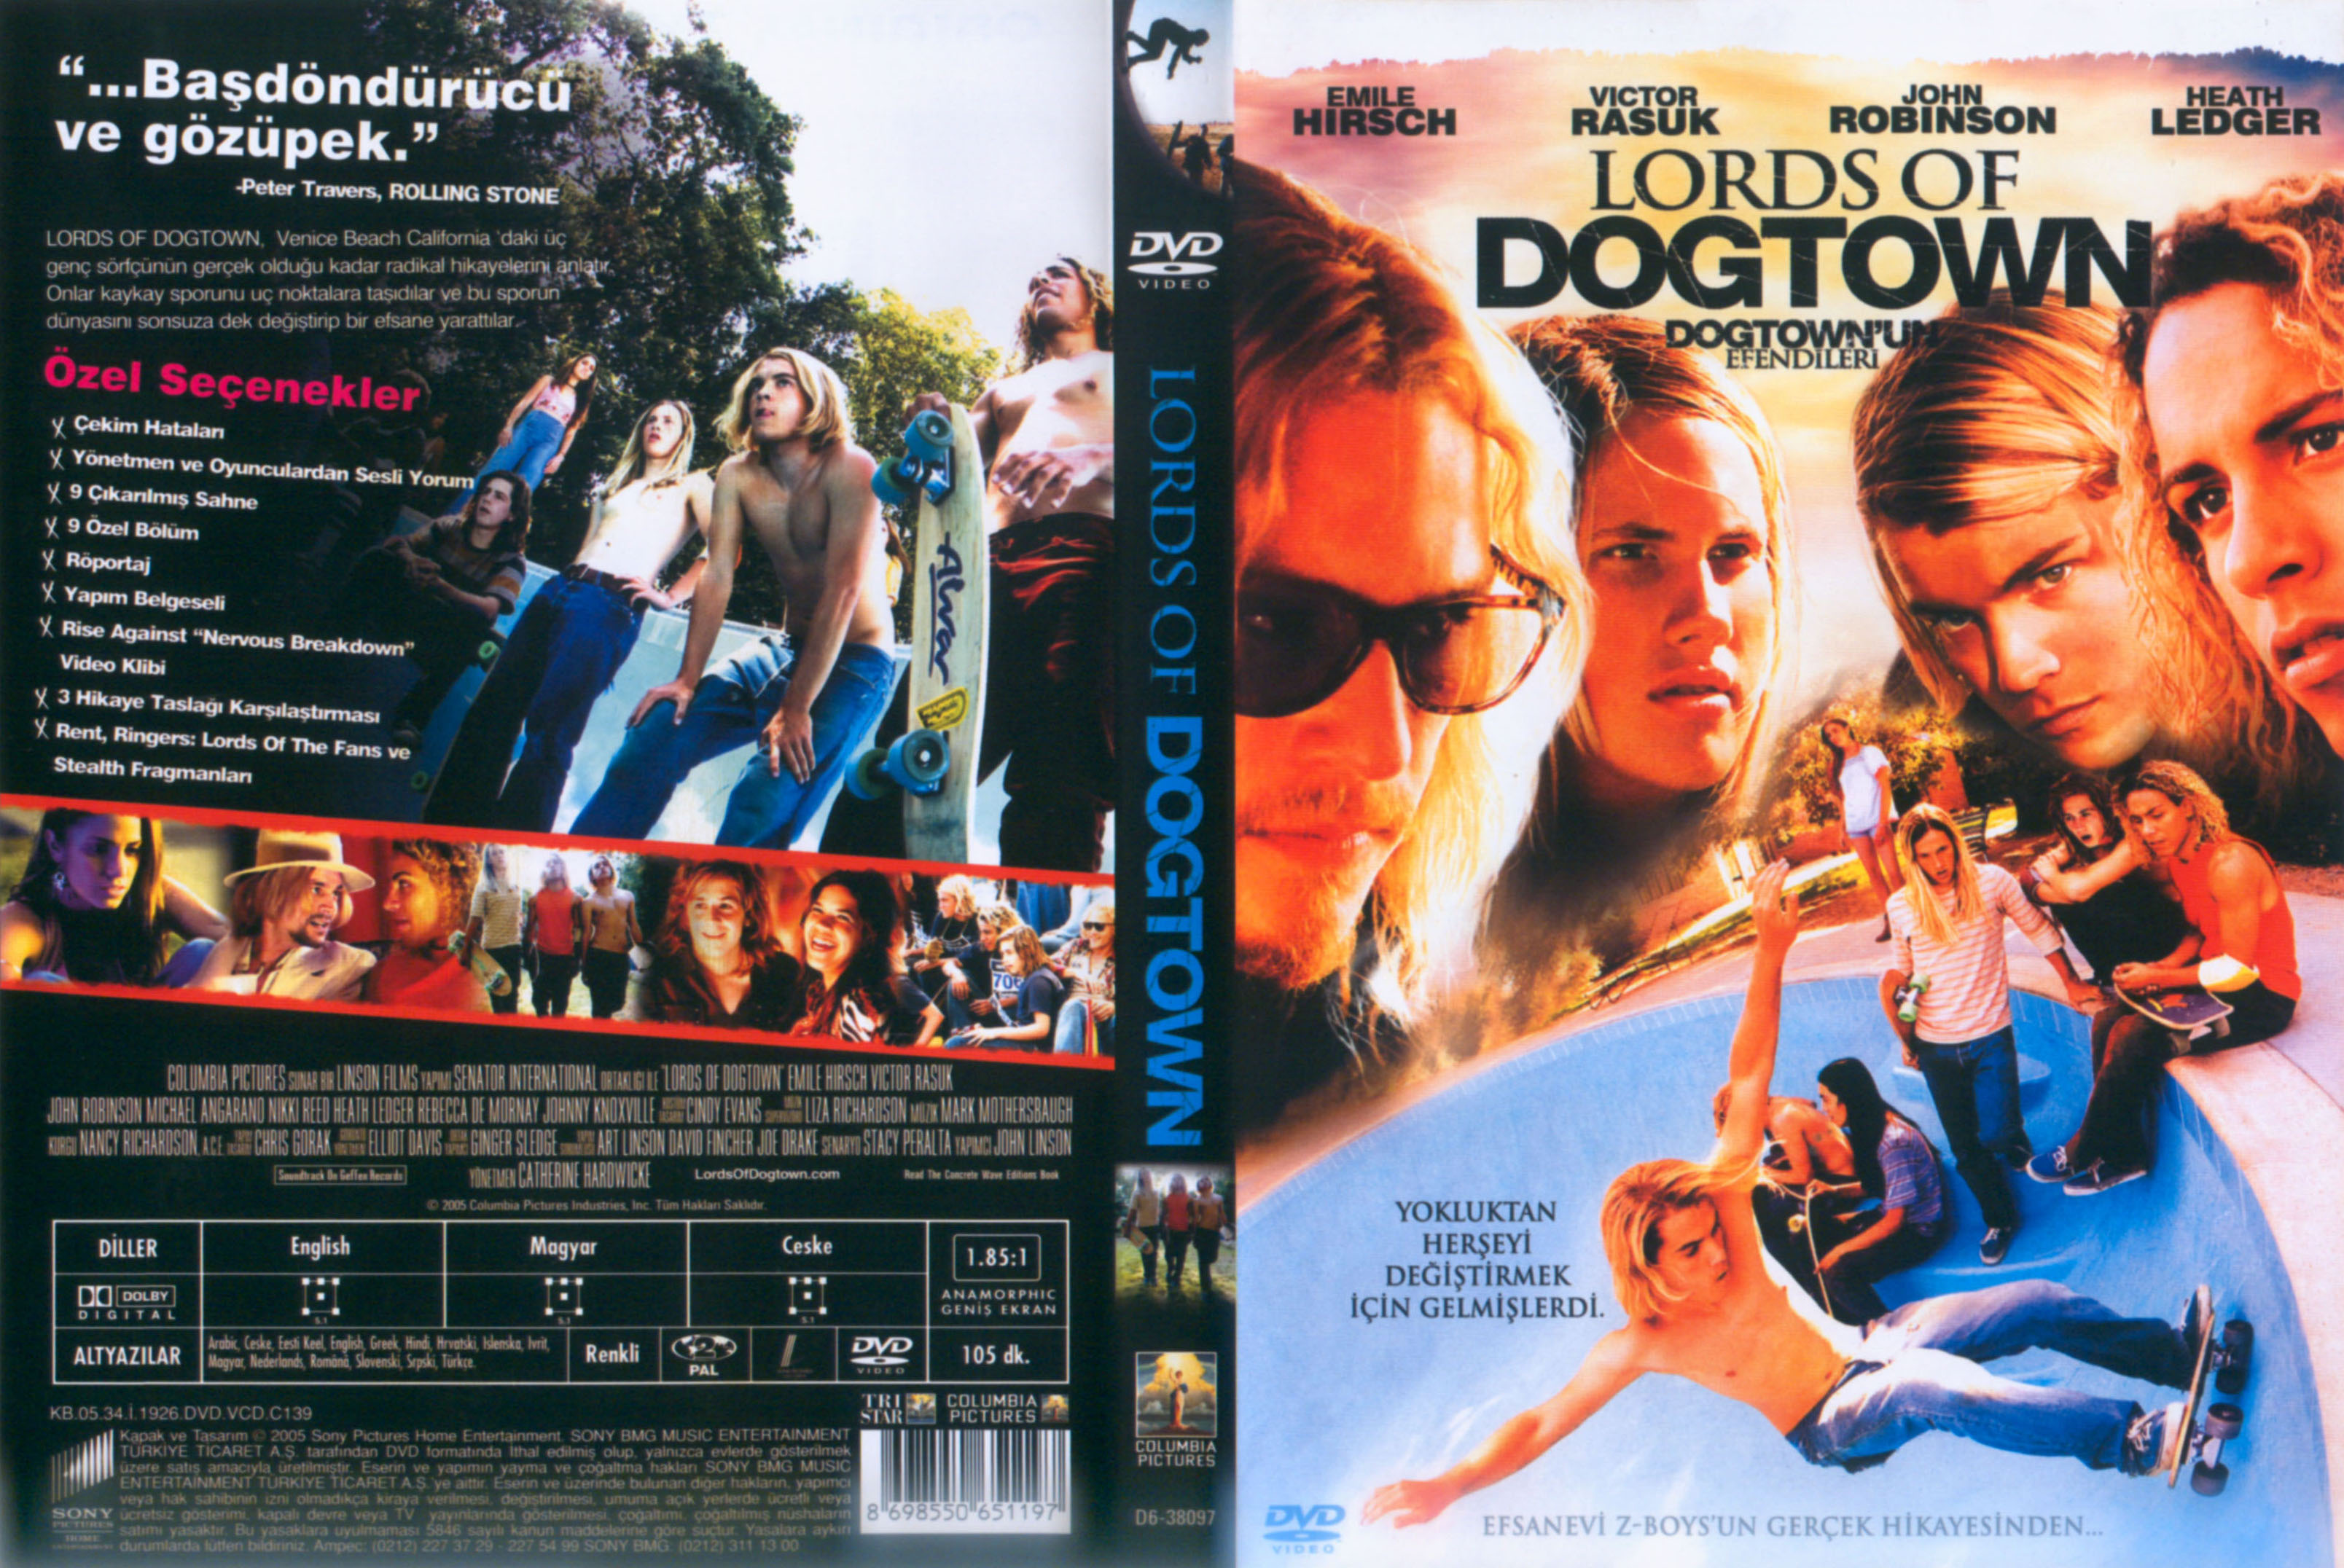 Lord of Dogtown Blu-ray